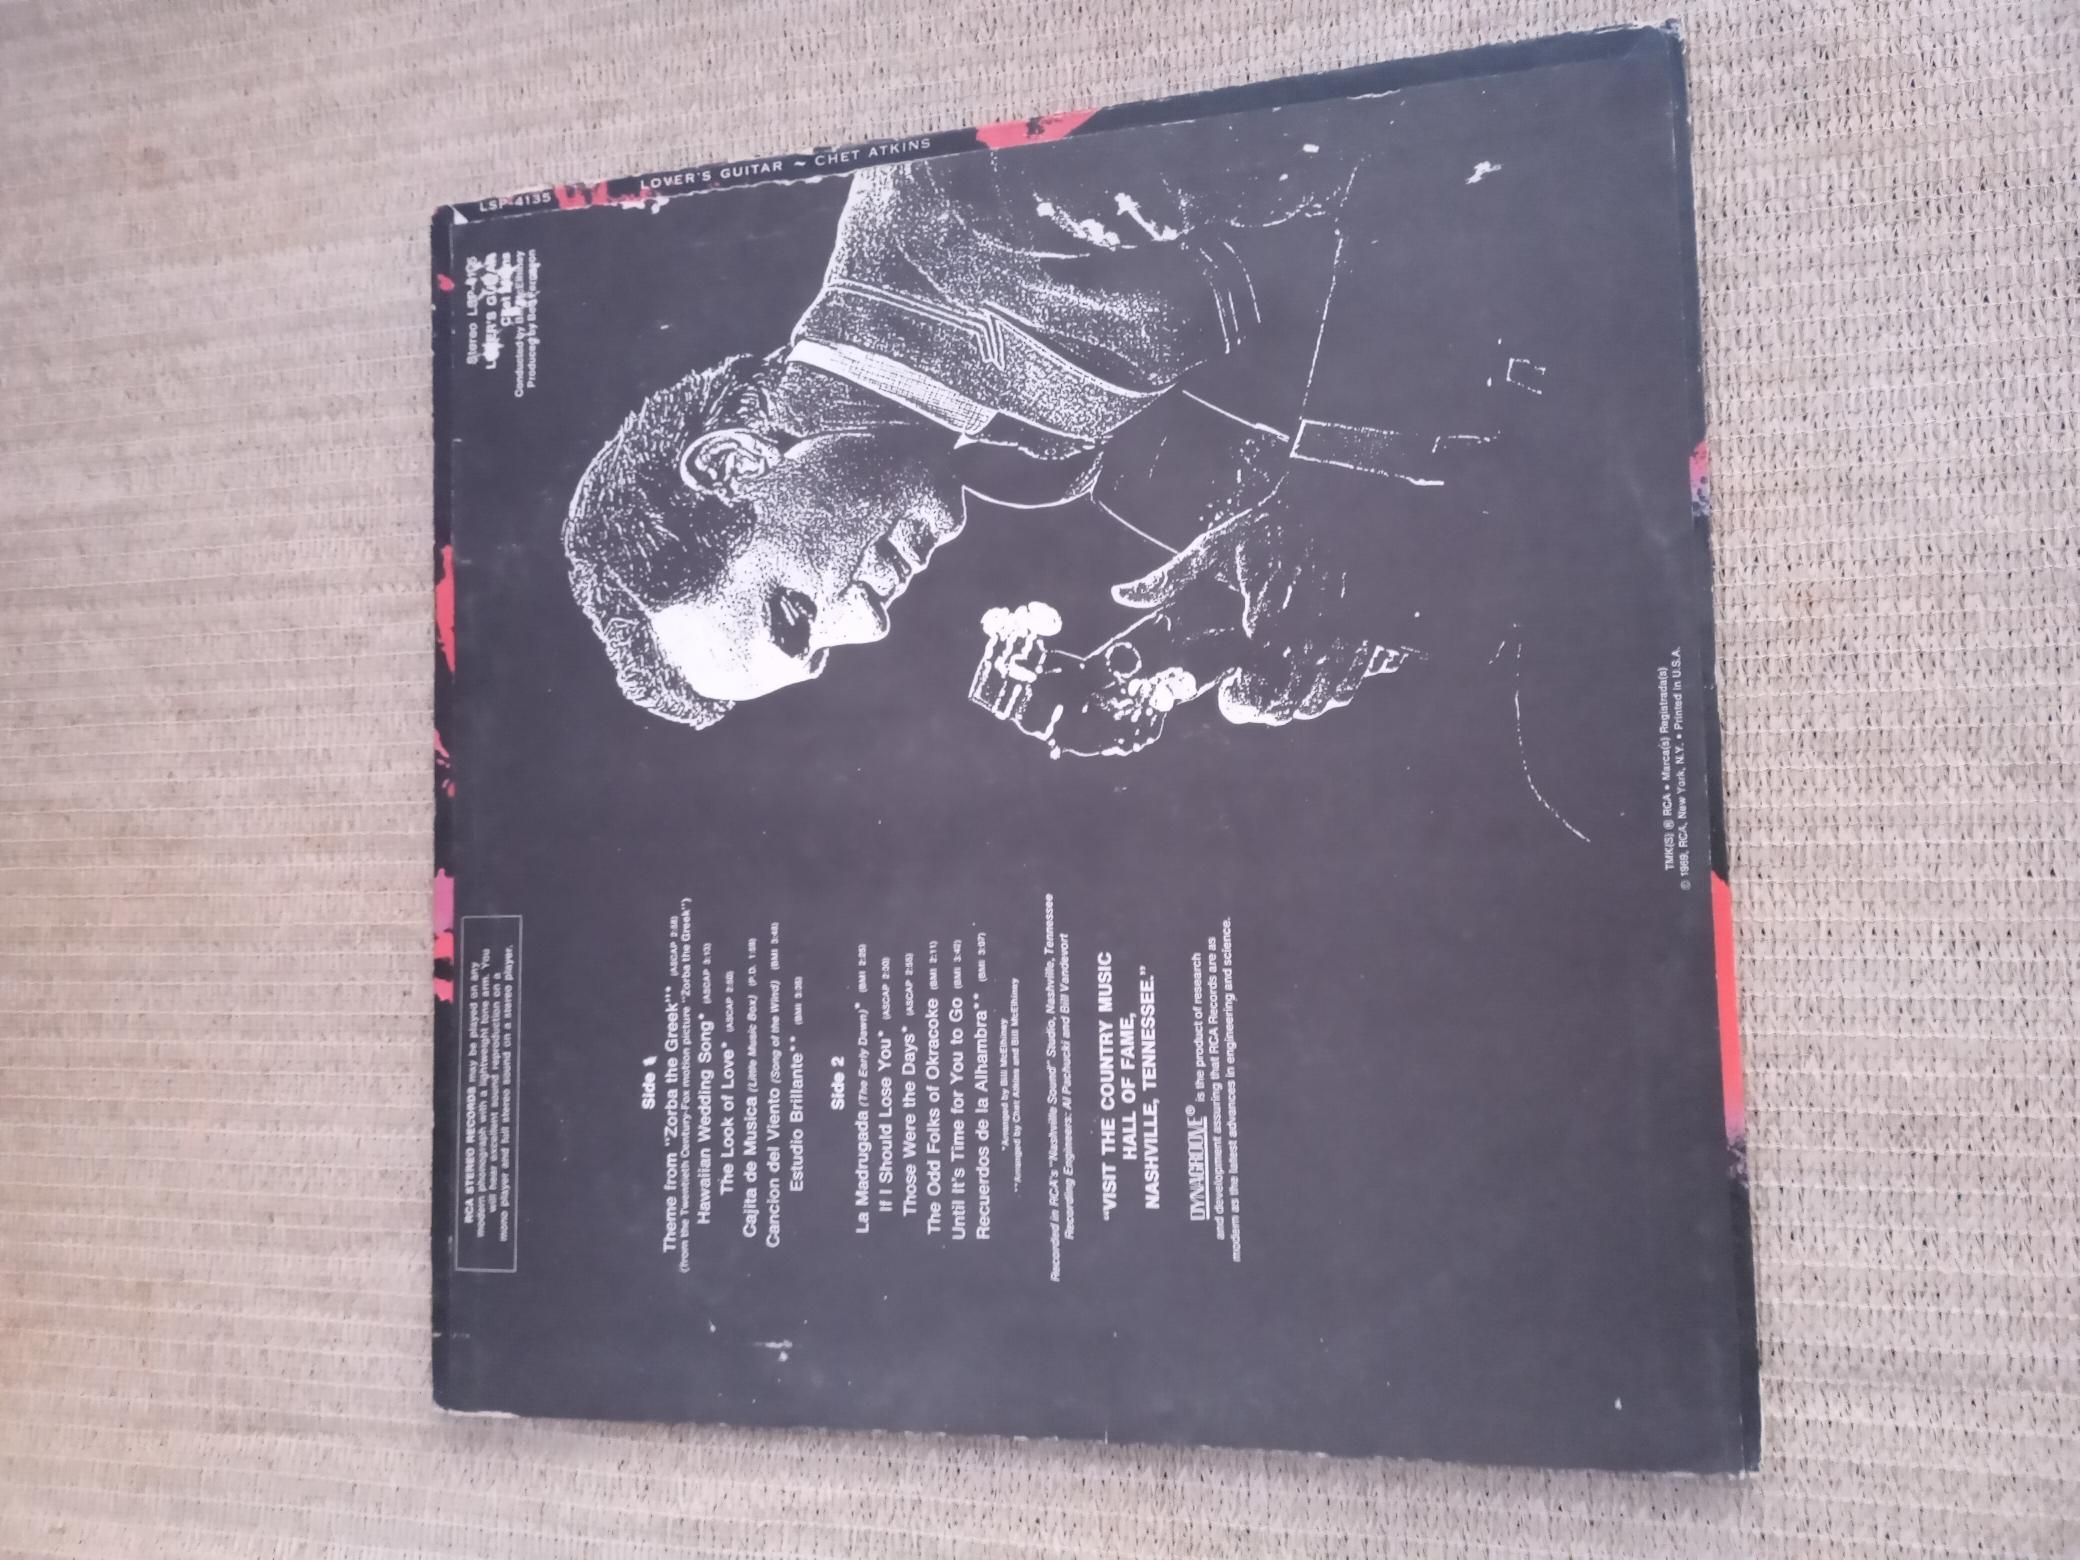 Chet Atkins "Mr. Guitar Country Gentleman" signed LP